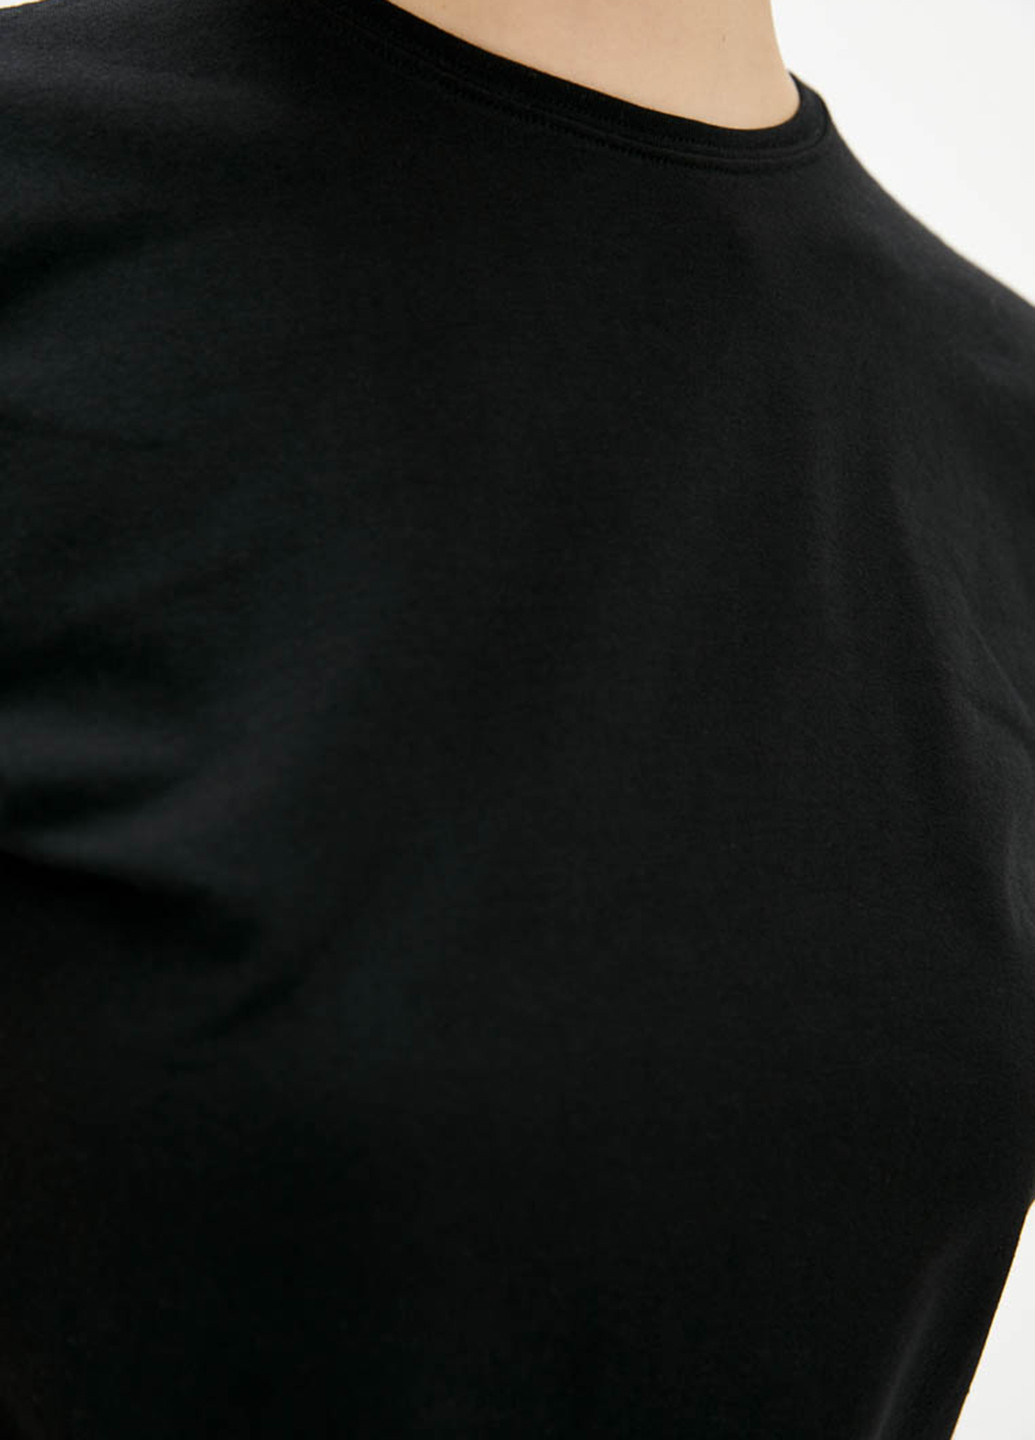 Черная летняя футболка Promin.